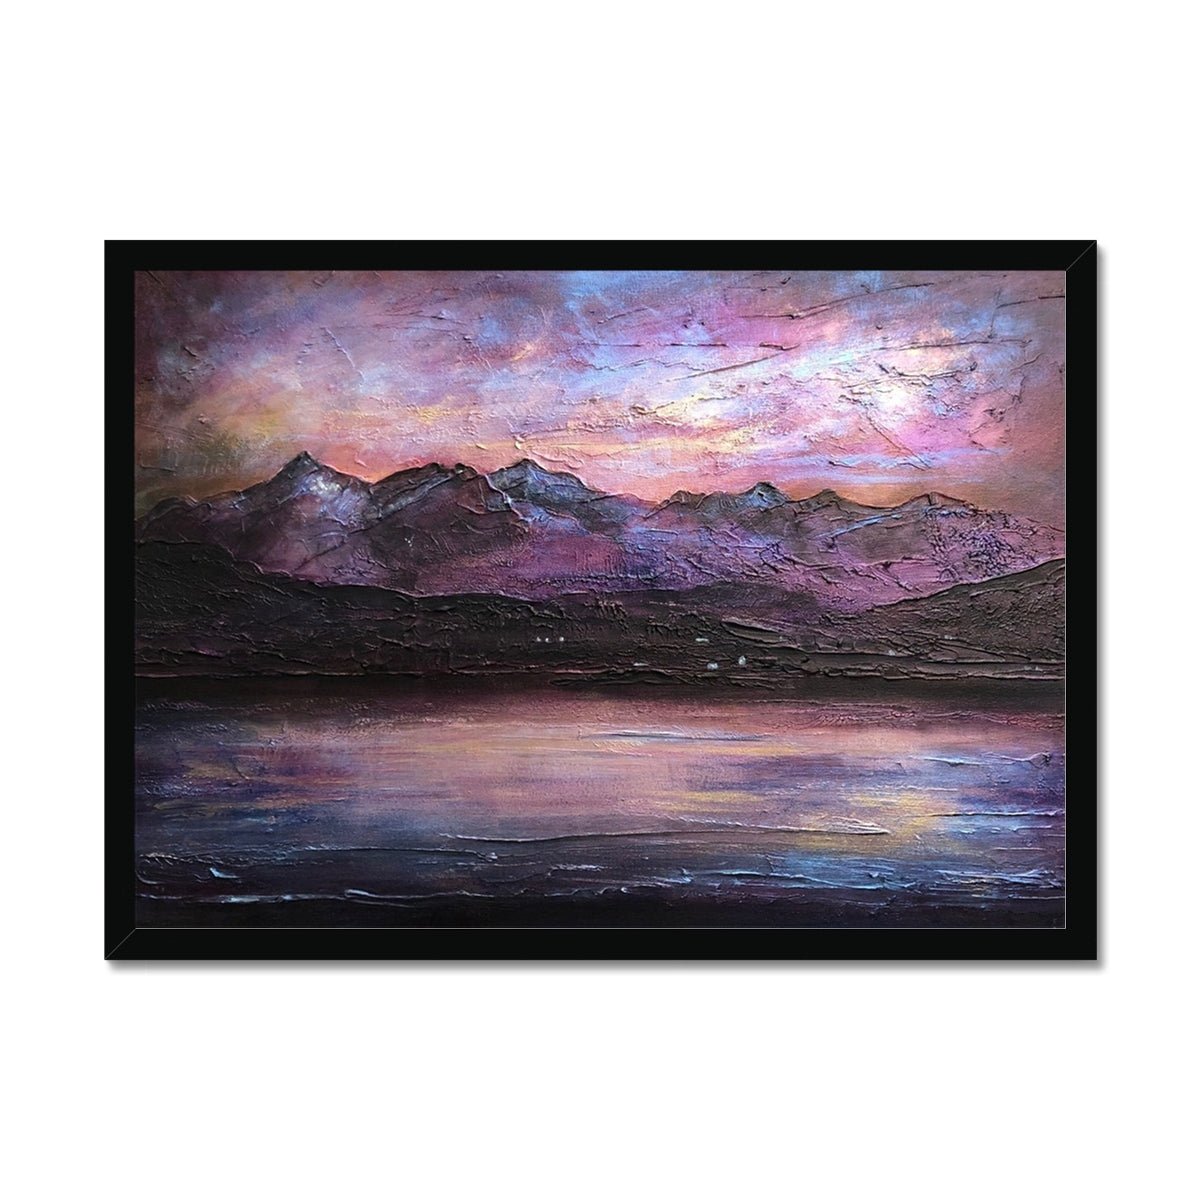 Last Skye Light Painting | Framed Prints From Scotland-Framed Prints-Skye Art Gallery-A2 Landscape-Black Frame-Paintings, Prints, Homeware, Art Gifts From Scotland By Scottish Artist Kevin Hunter